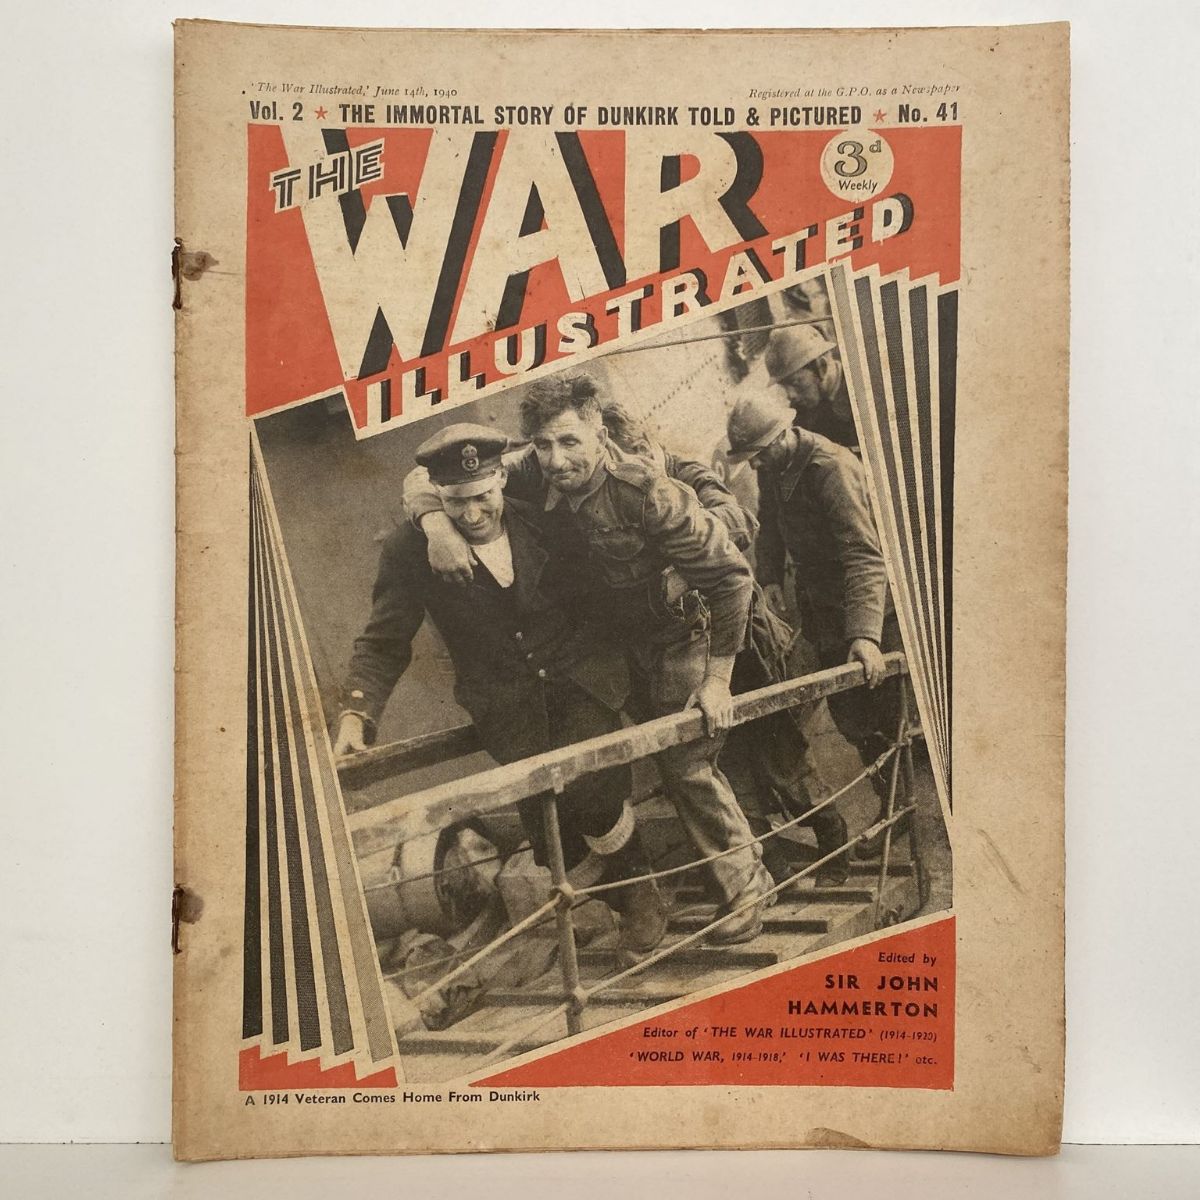 THE WAR ILLUSTRATED - Vol 2, No 41, 14th June 1940